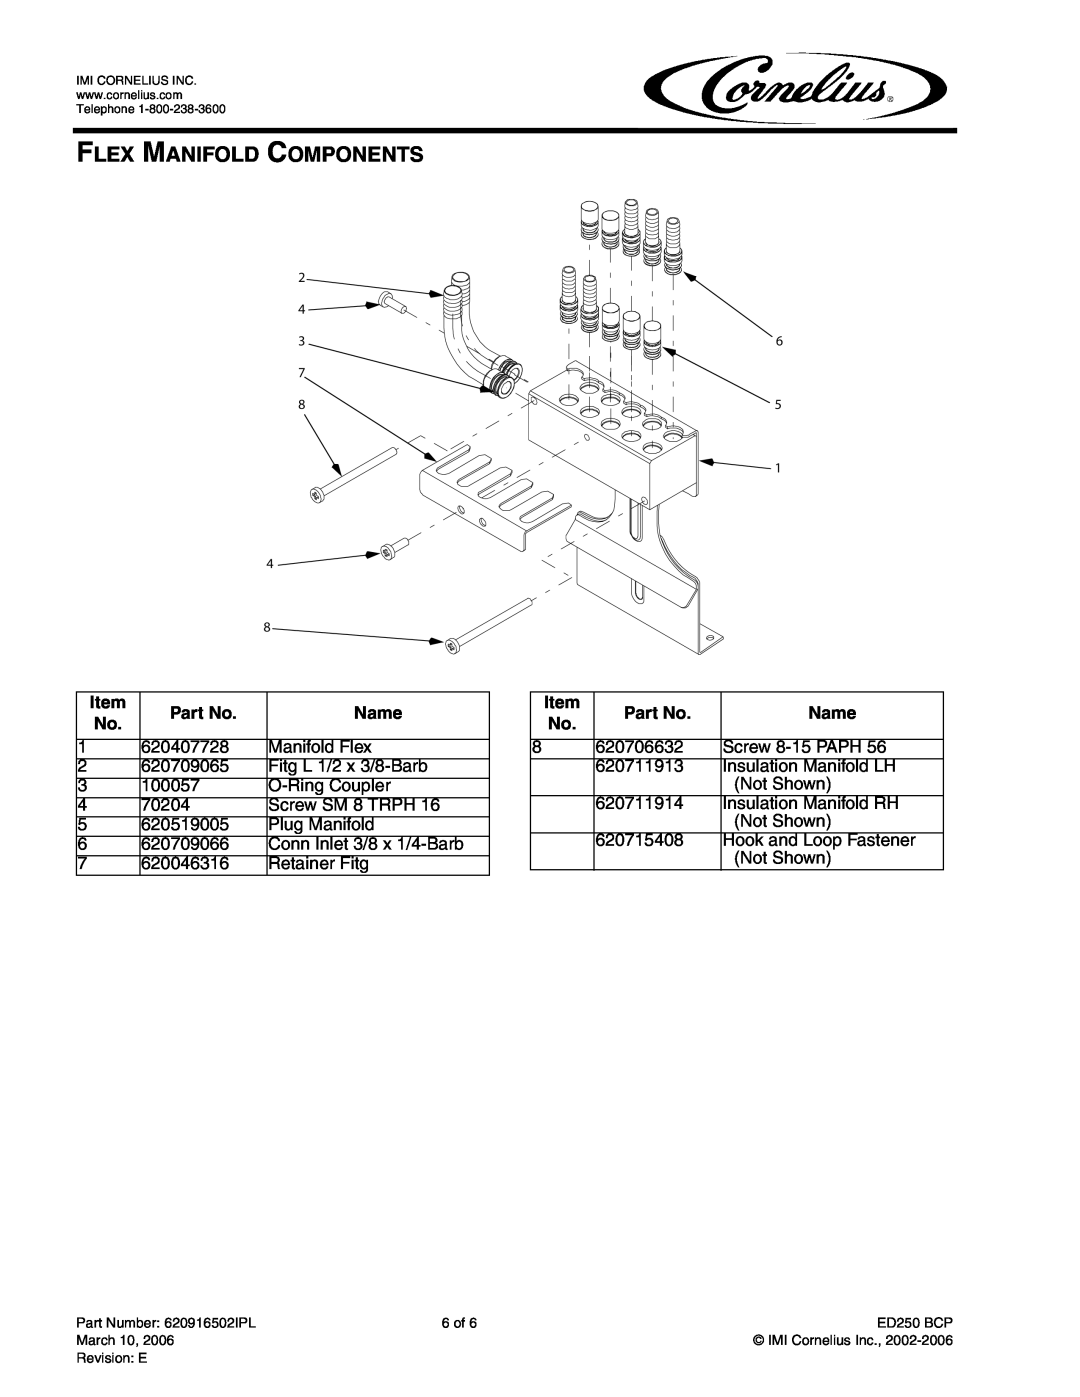 Panasonic ED250 BCP manual Flex Manifold Components, Name 